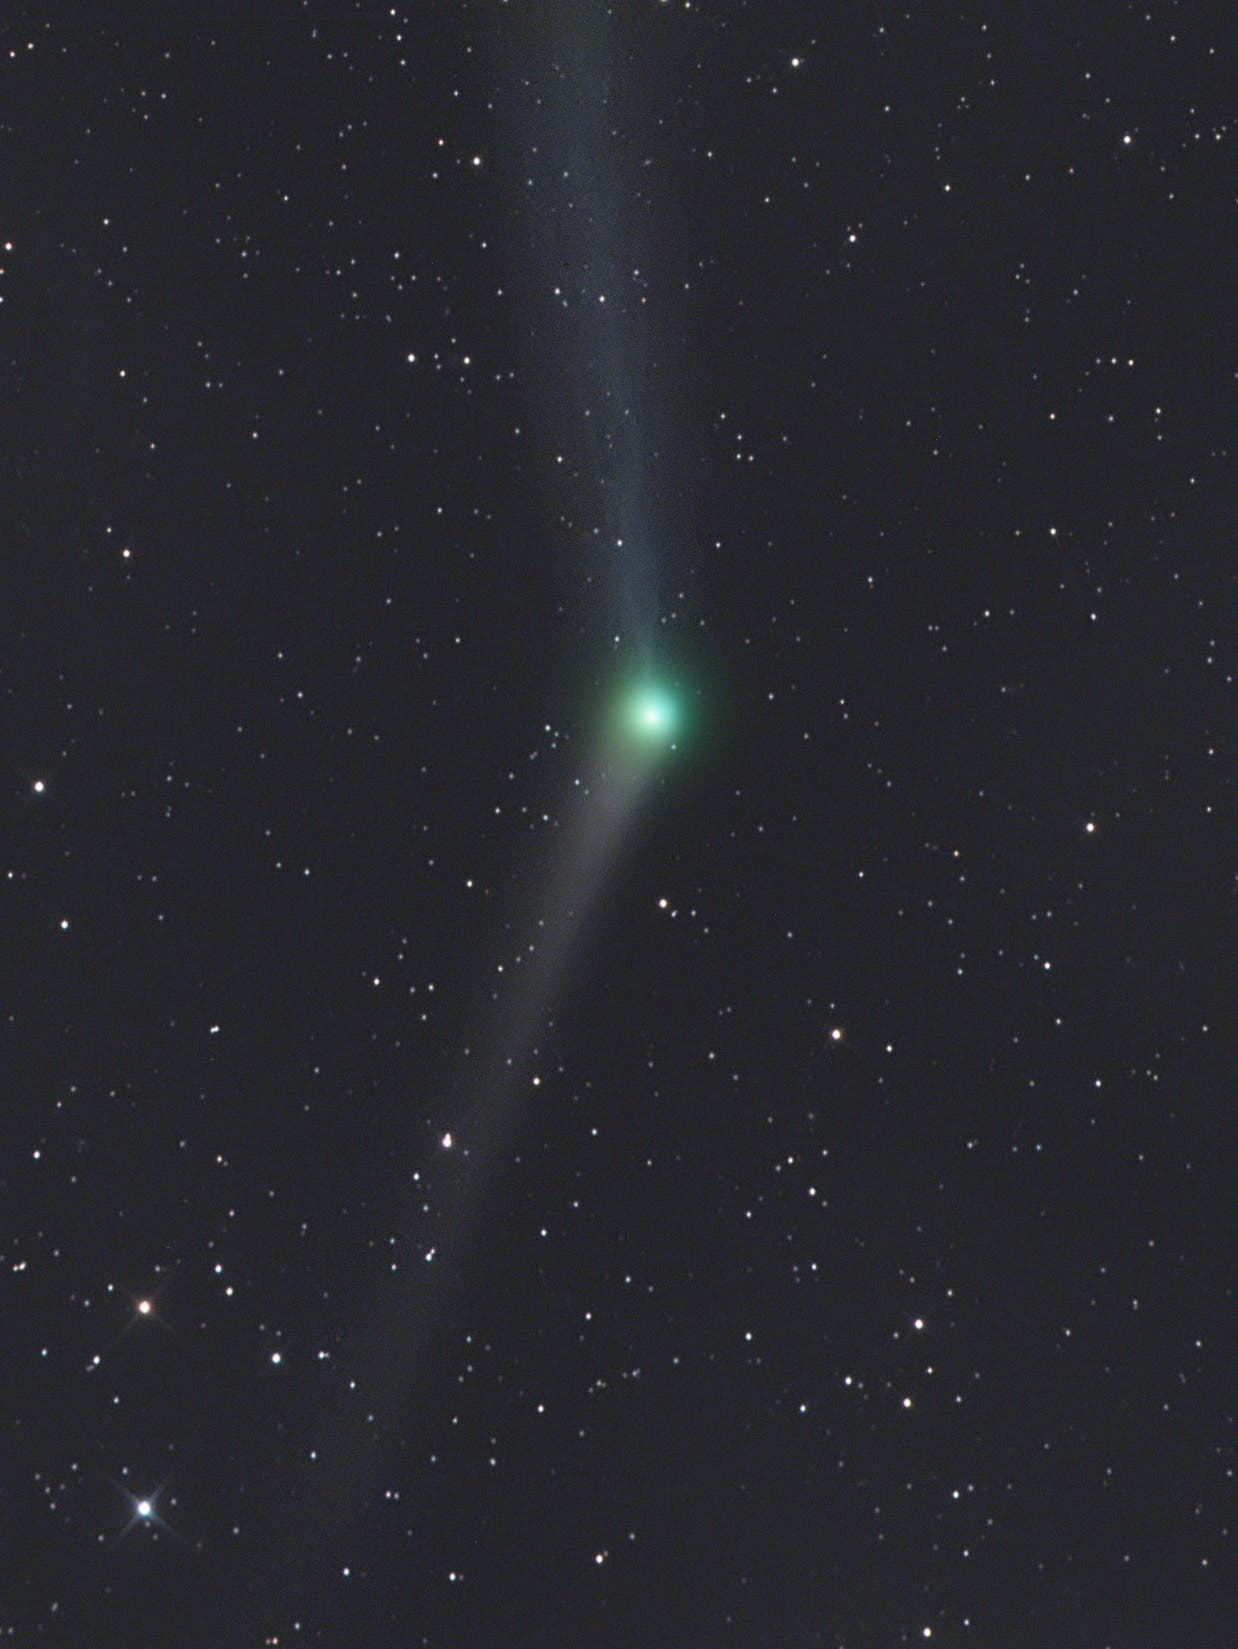 Komet C/2012 K1 Panstarrs wieder zurück